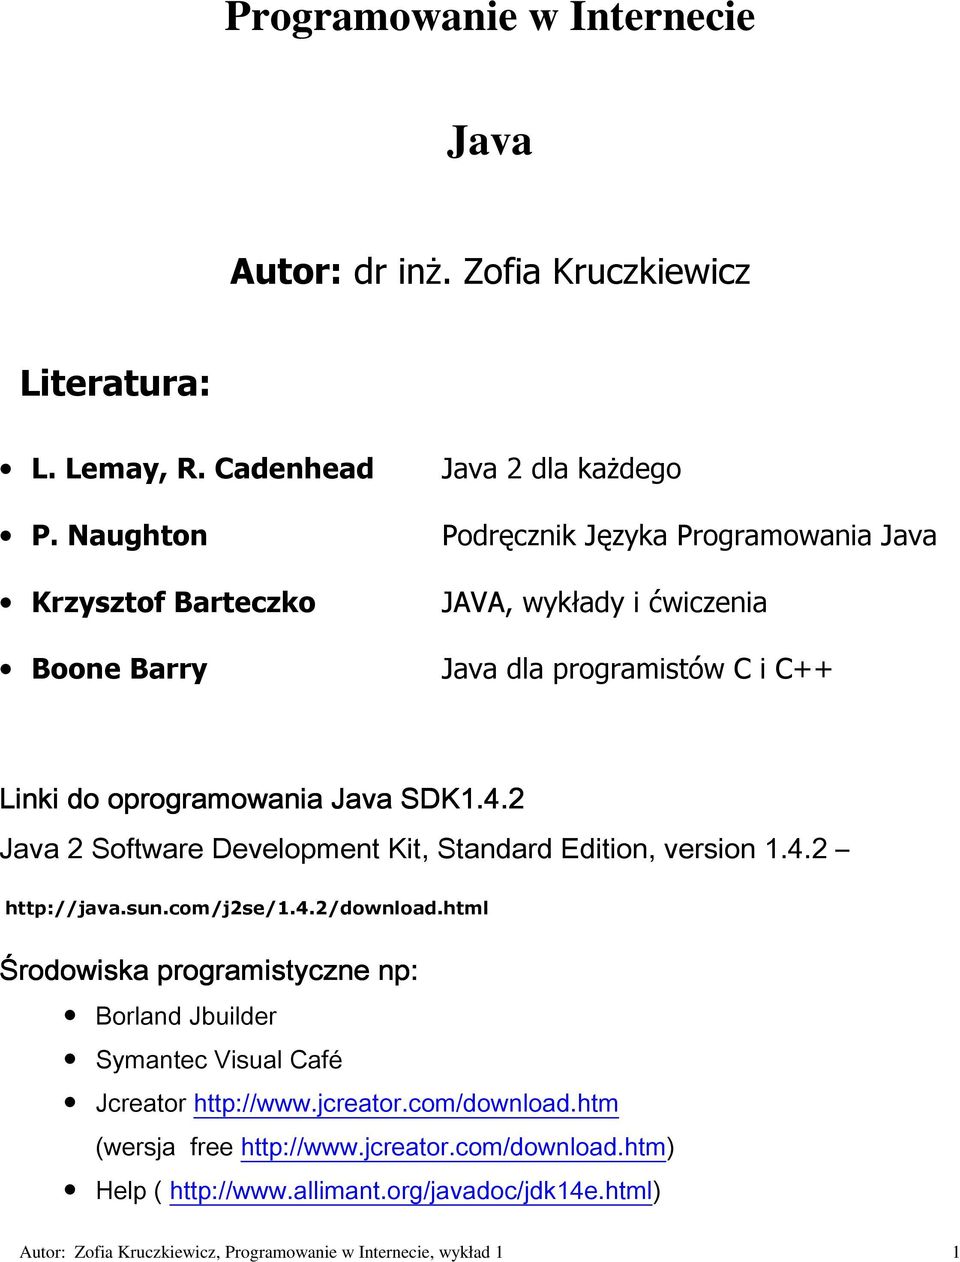 oprogramowania Java SDK1.4.2 Java 2 Software Development Kit, Standard Edition, version 1.4.2 http://java.sun.com/j2se/1.4.2/download.